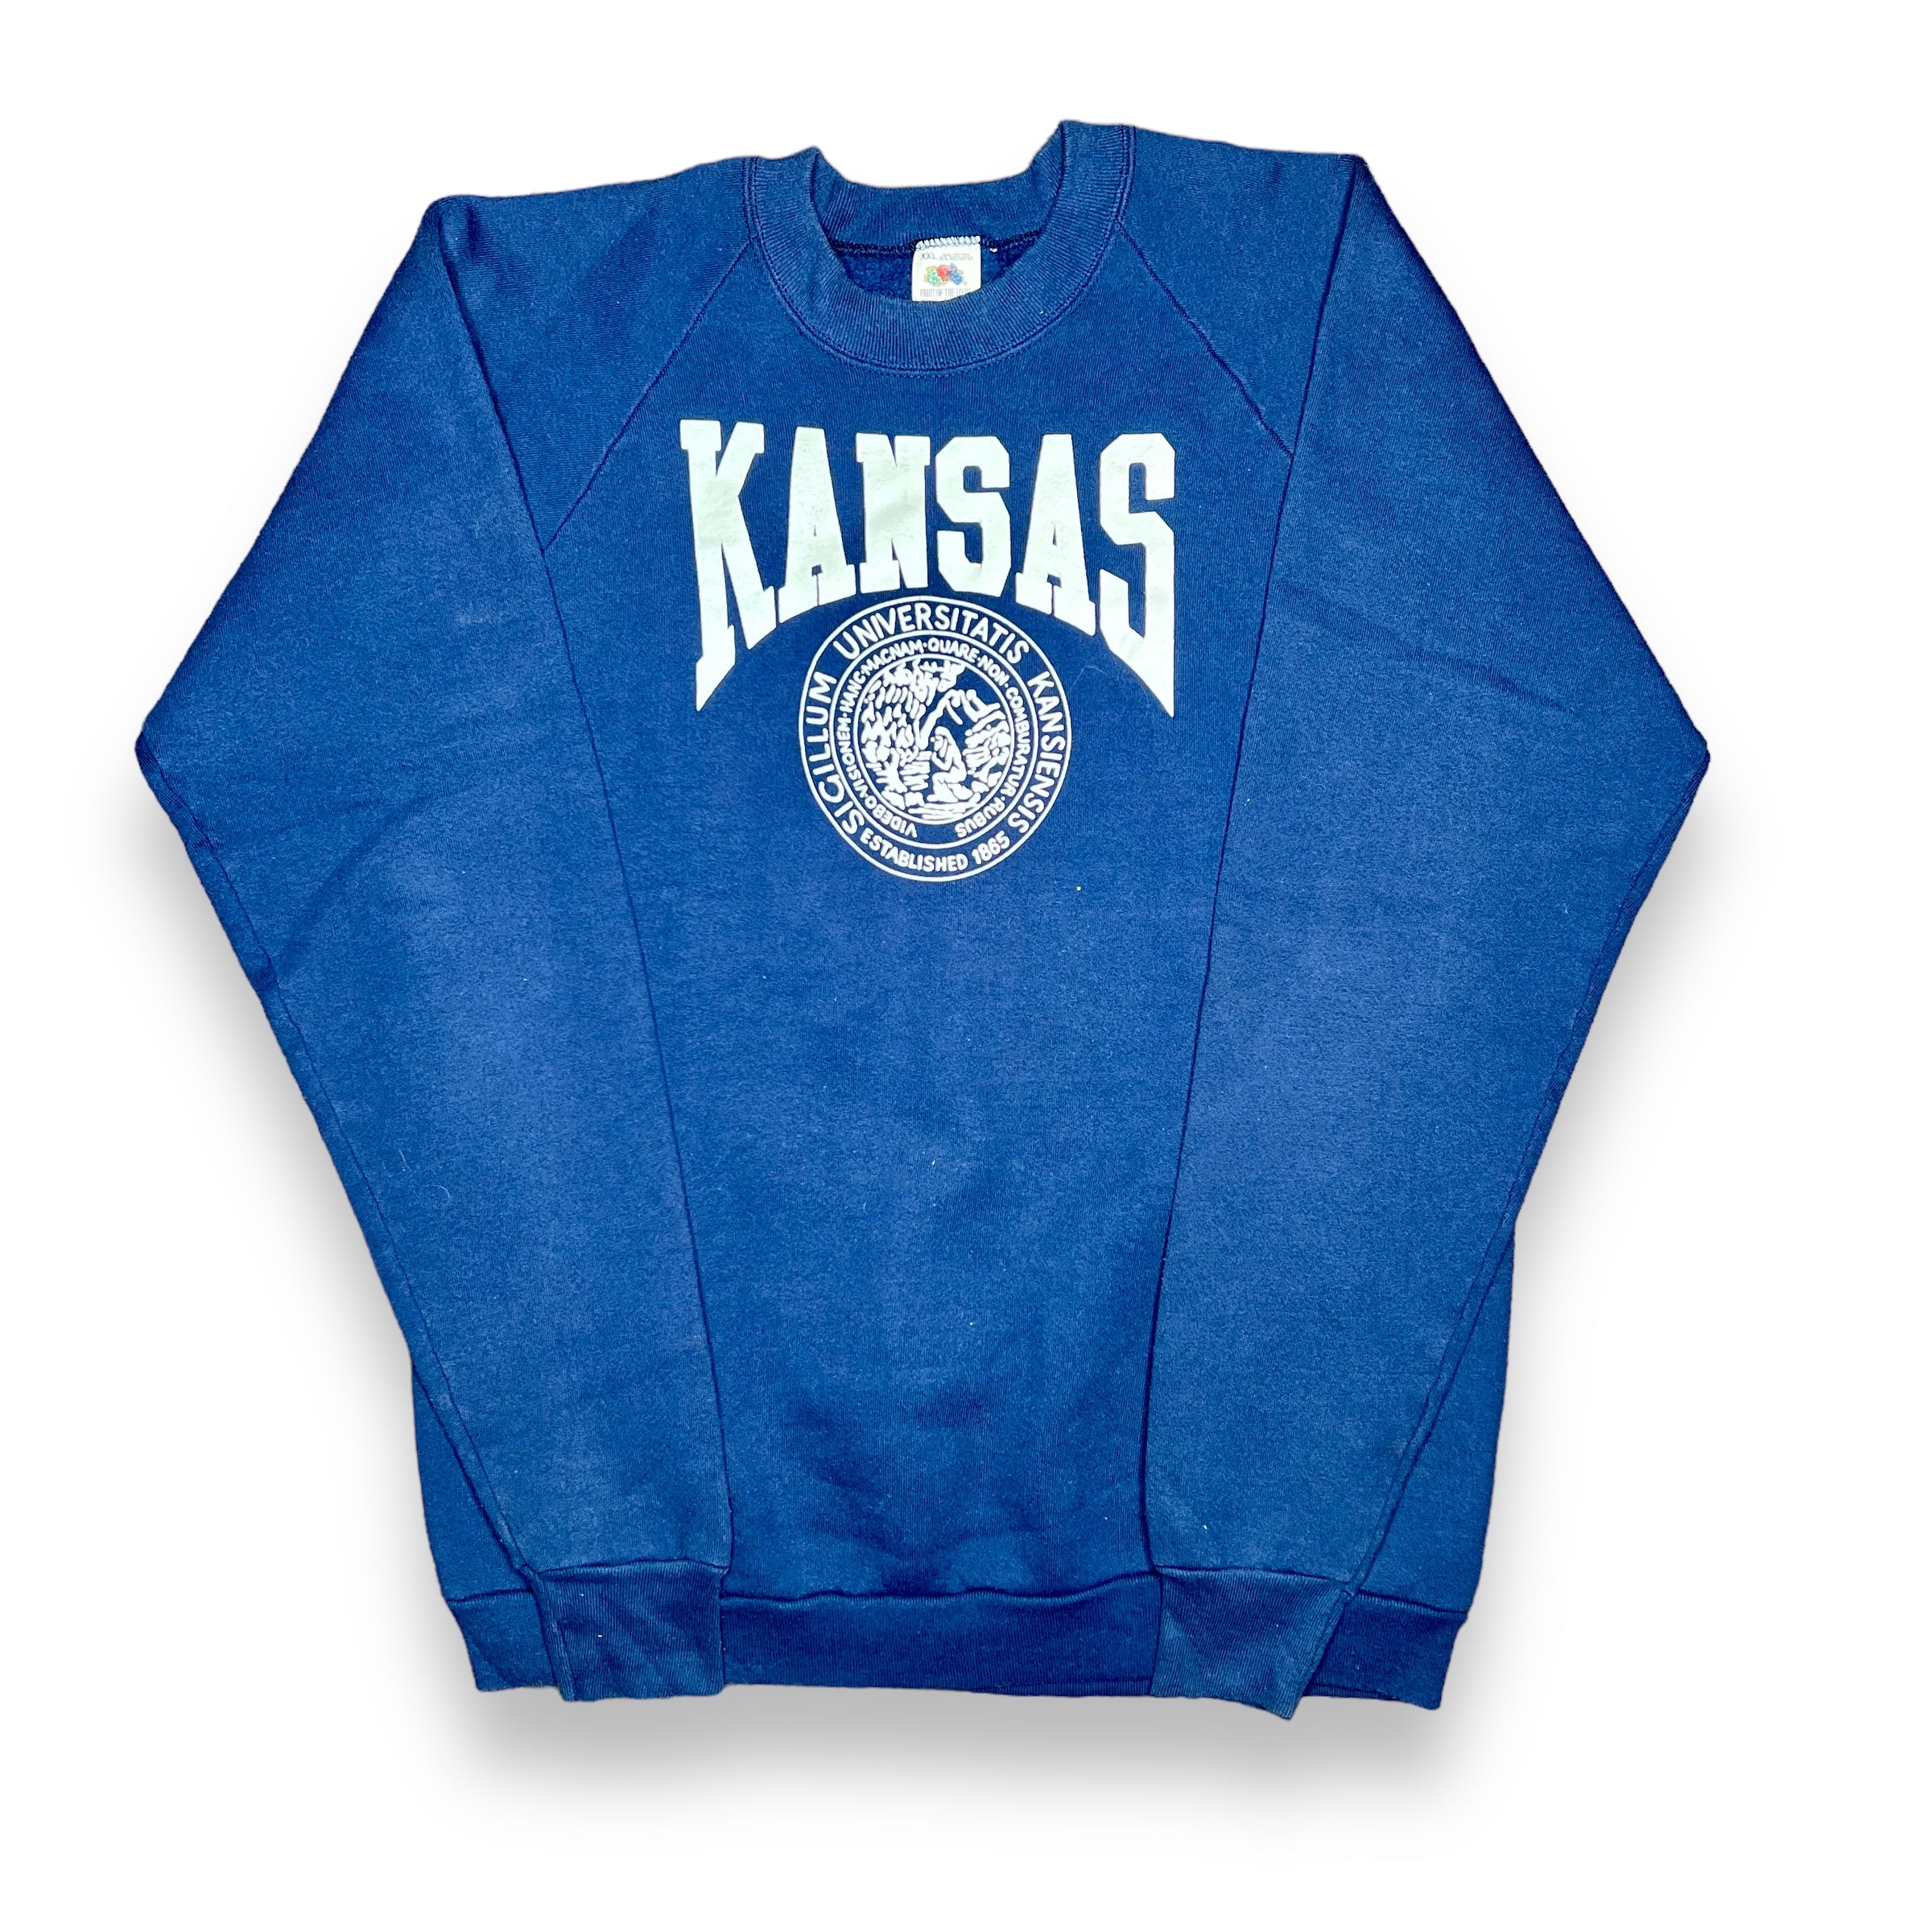 Vintage KU Sweatshirt - (XL)